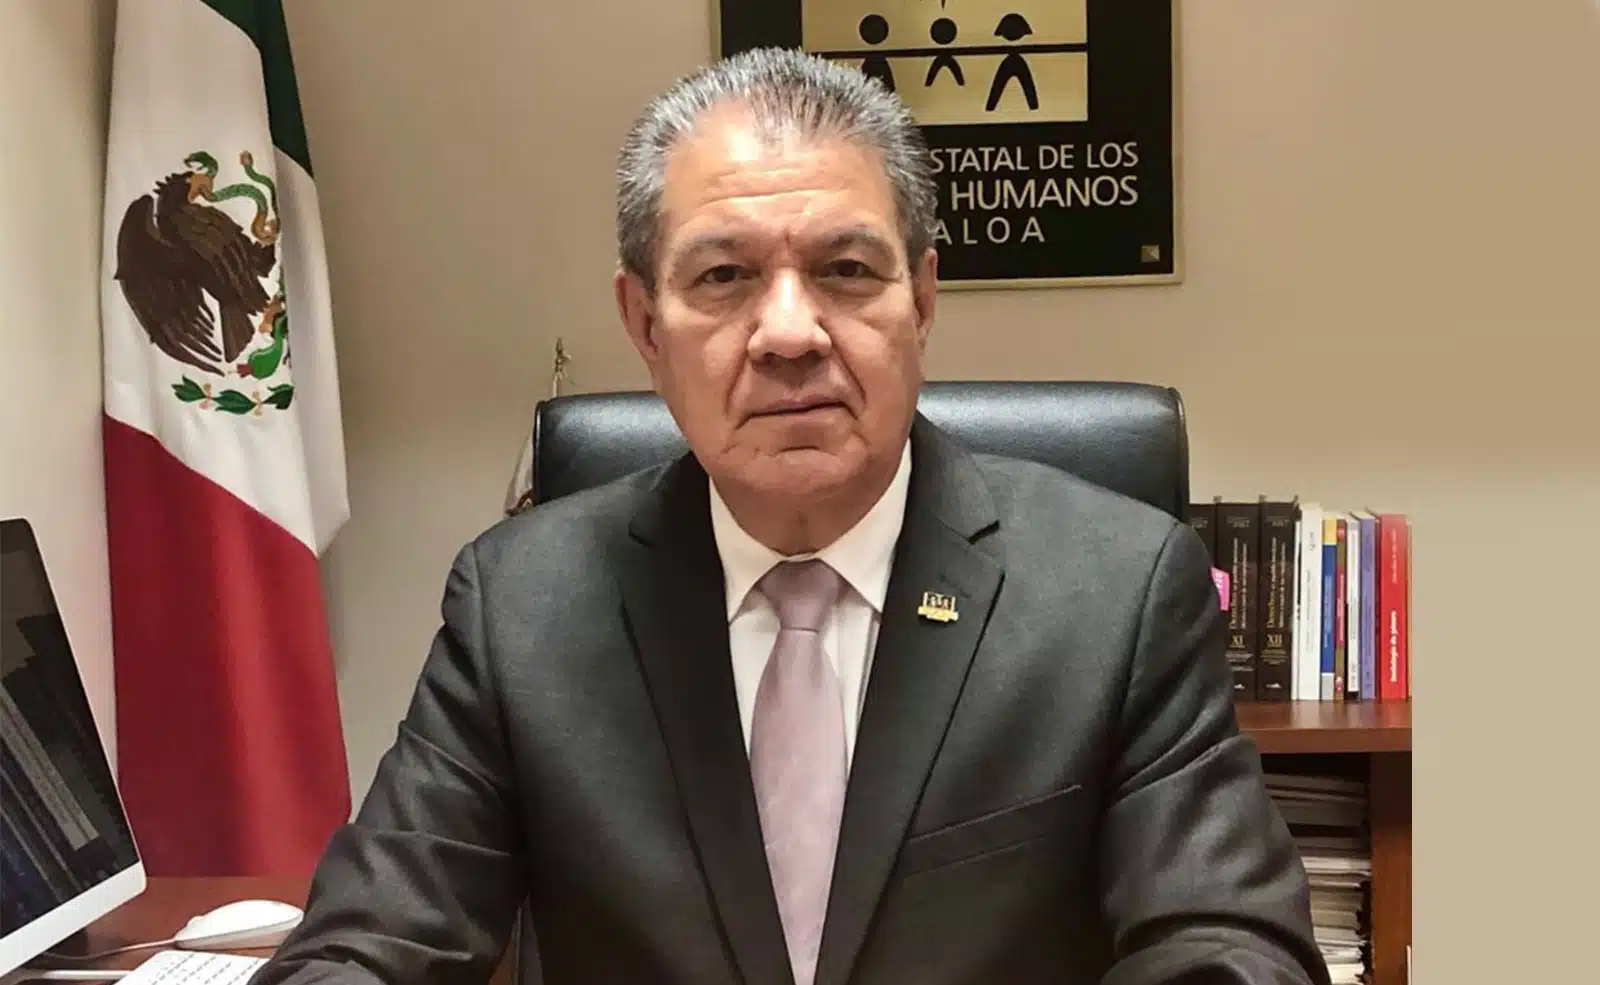 Ombudsman José Carlos Álvarez Ortega